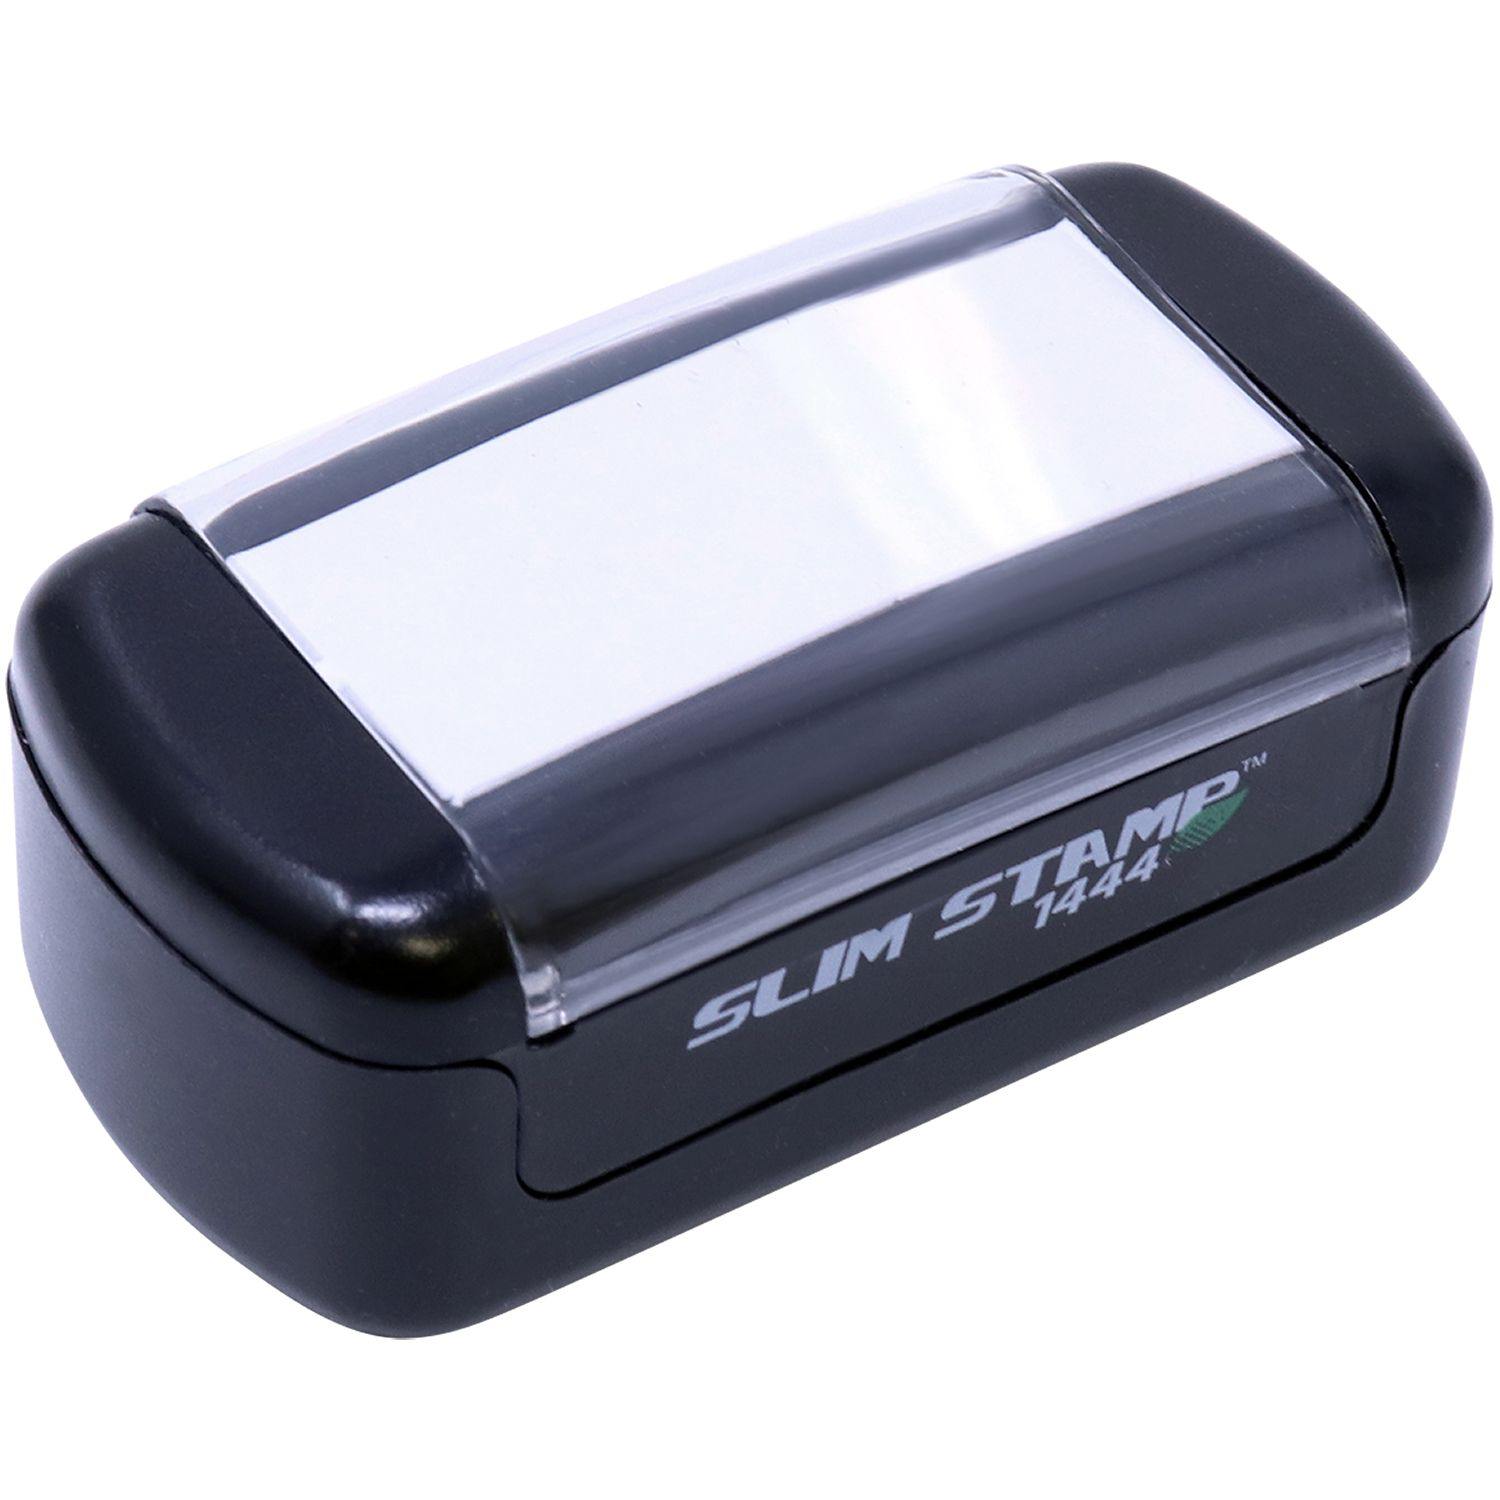 Slim Pre-Inked Cargado Stamp - Engineer Seal Stamps - Brand_Slim, Impression Size_Small, Stamp Type_Pre-Inked Stamp, Type of Use_Office, Type of Use_Postal & Mailing